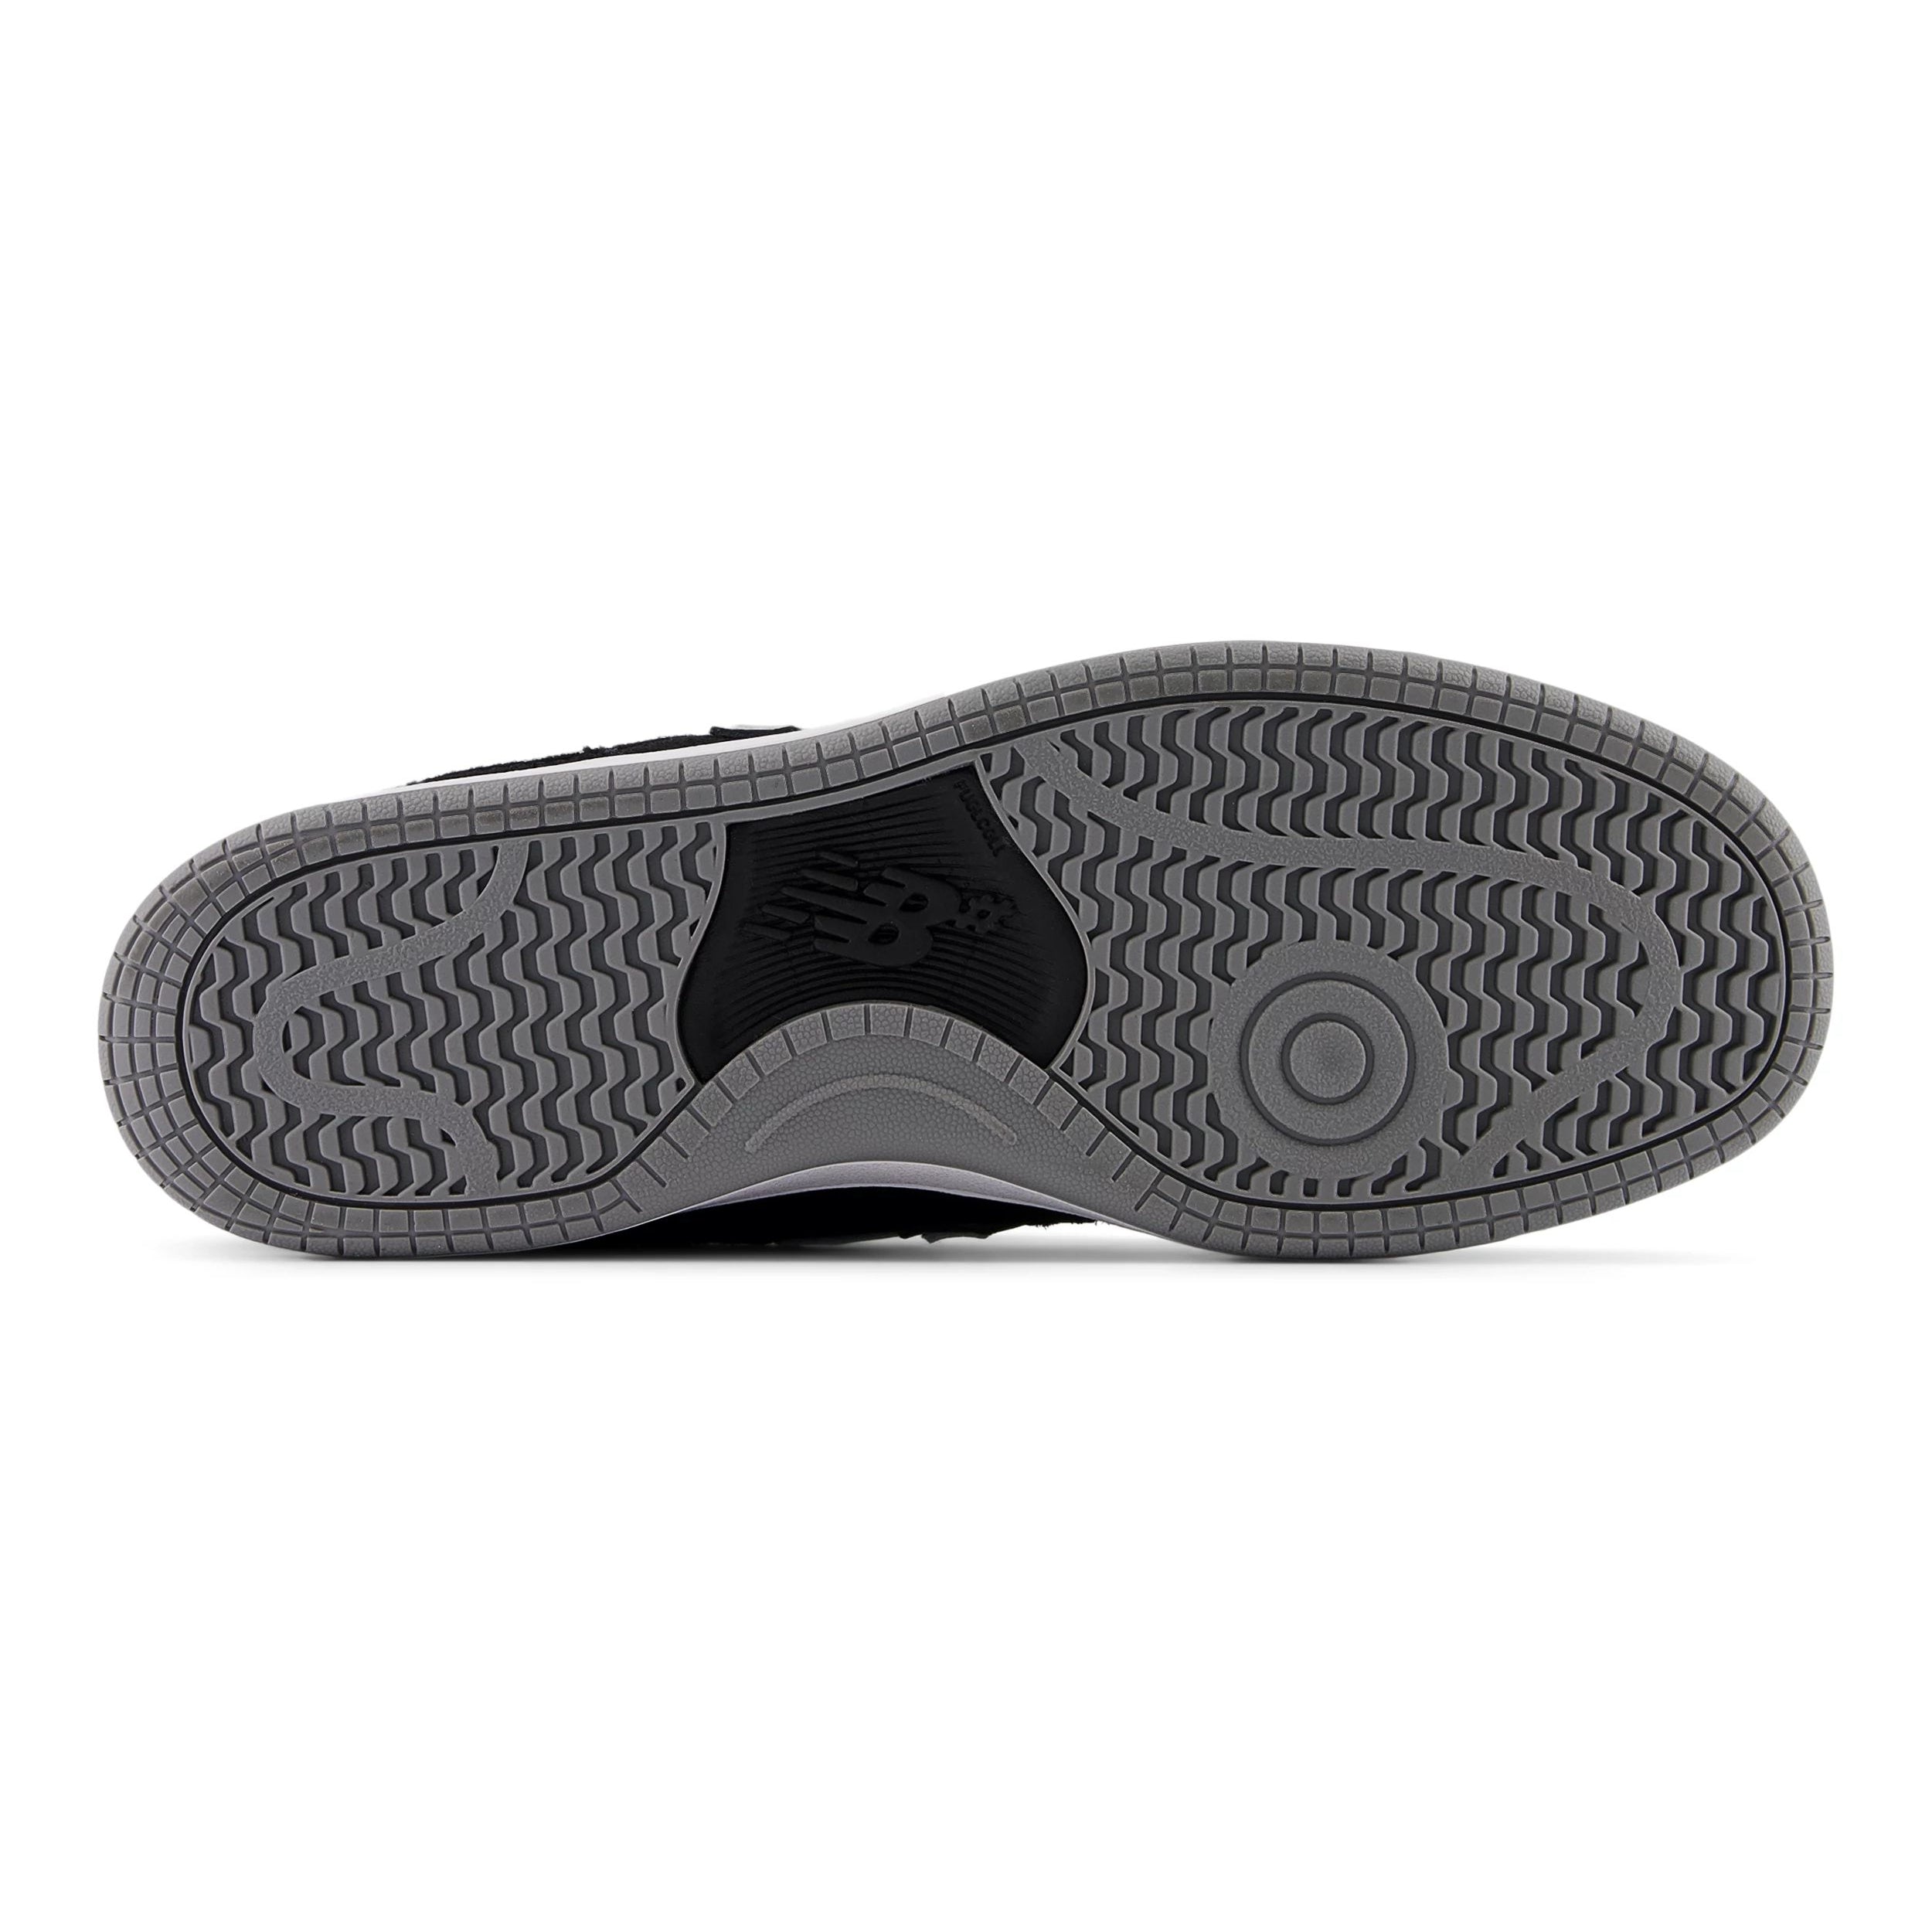 Black/Grey 480 NB Numeric Skateboard Shoe Bottom